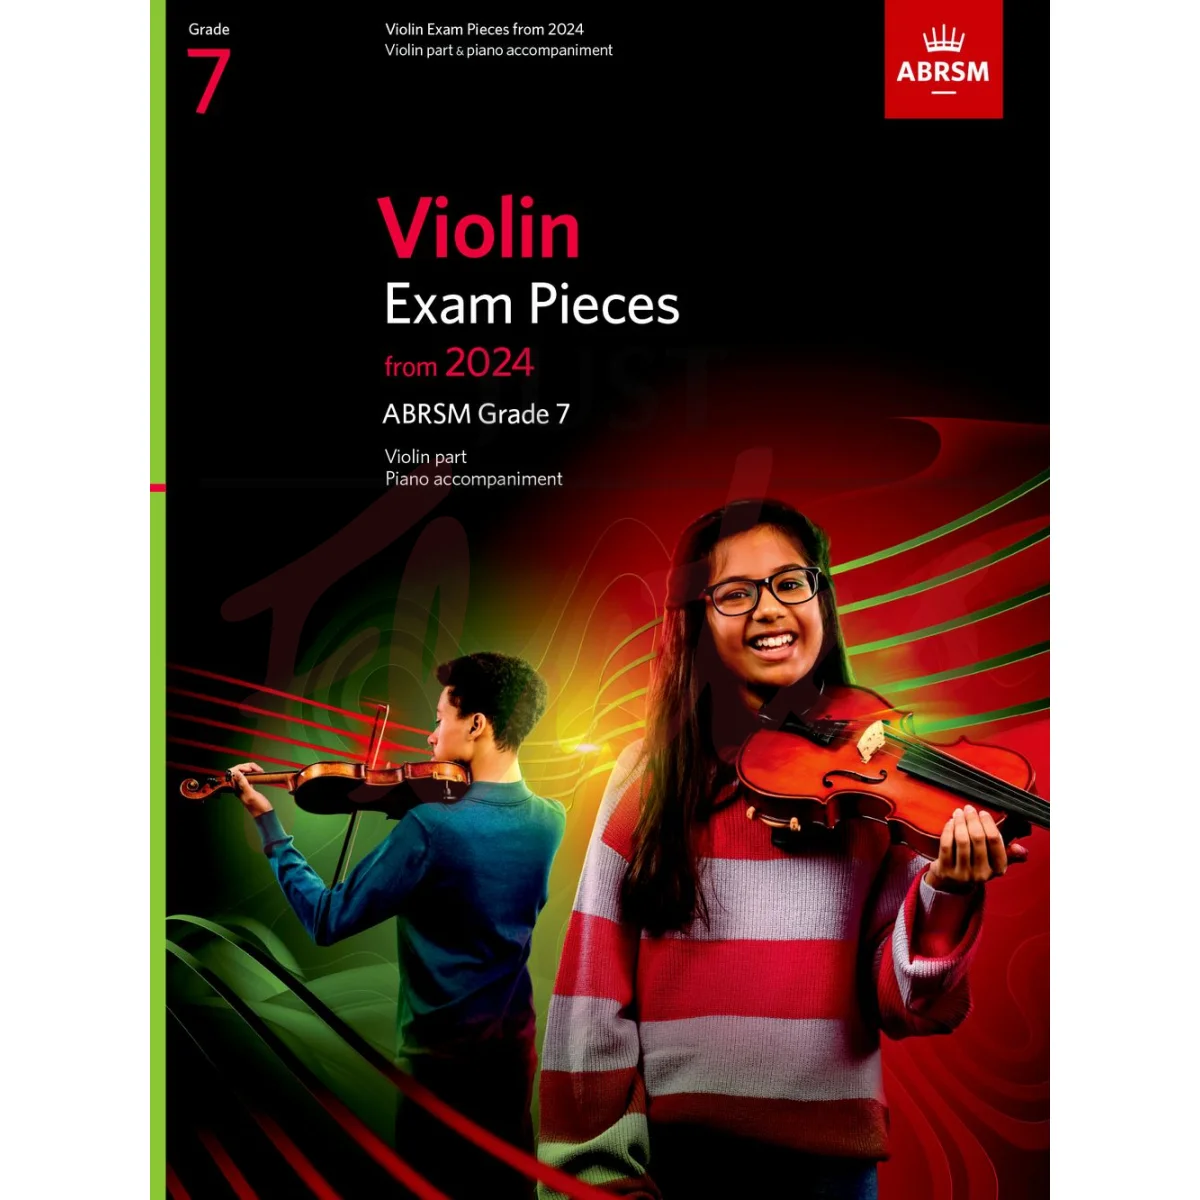 Violin Exam Pieces from 2024, Grade 7